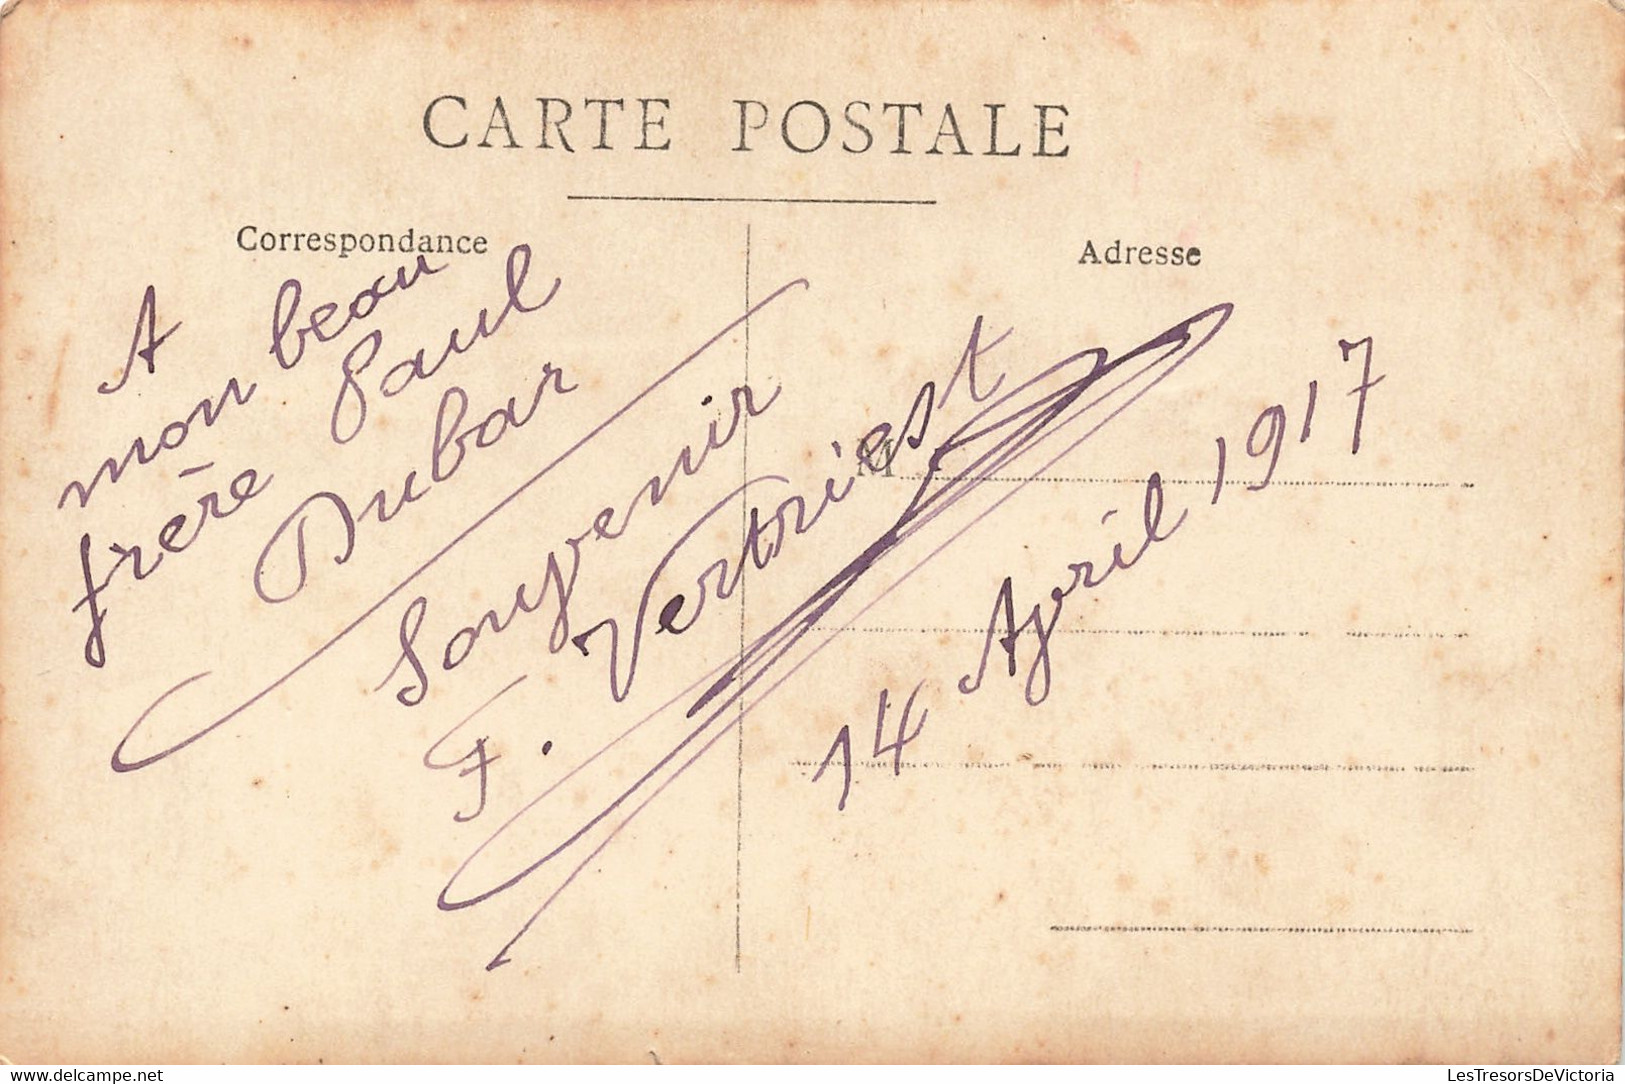 CPA - Militaria - Carte Photo  - Identification Paul Dubar - F. Vertriest - 1917 - Personen